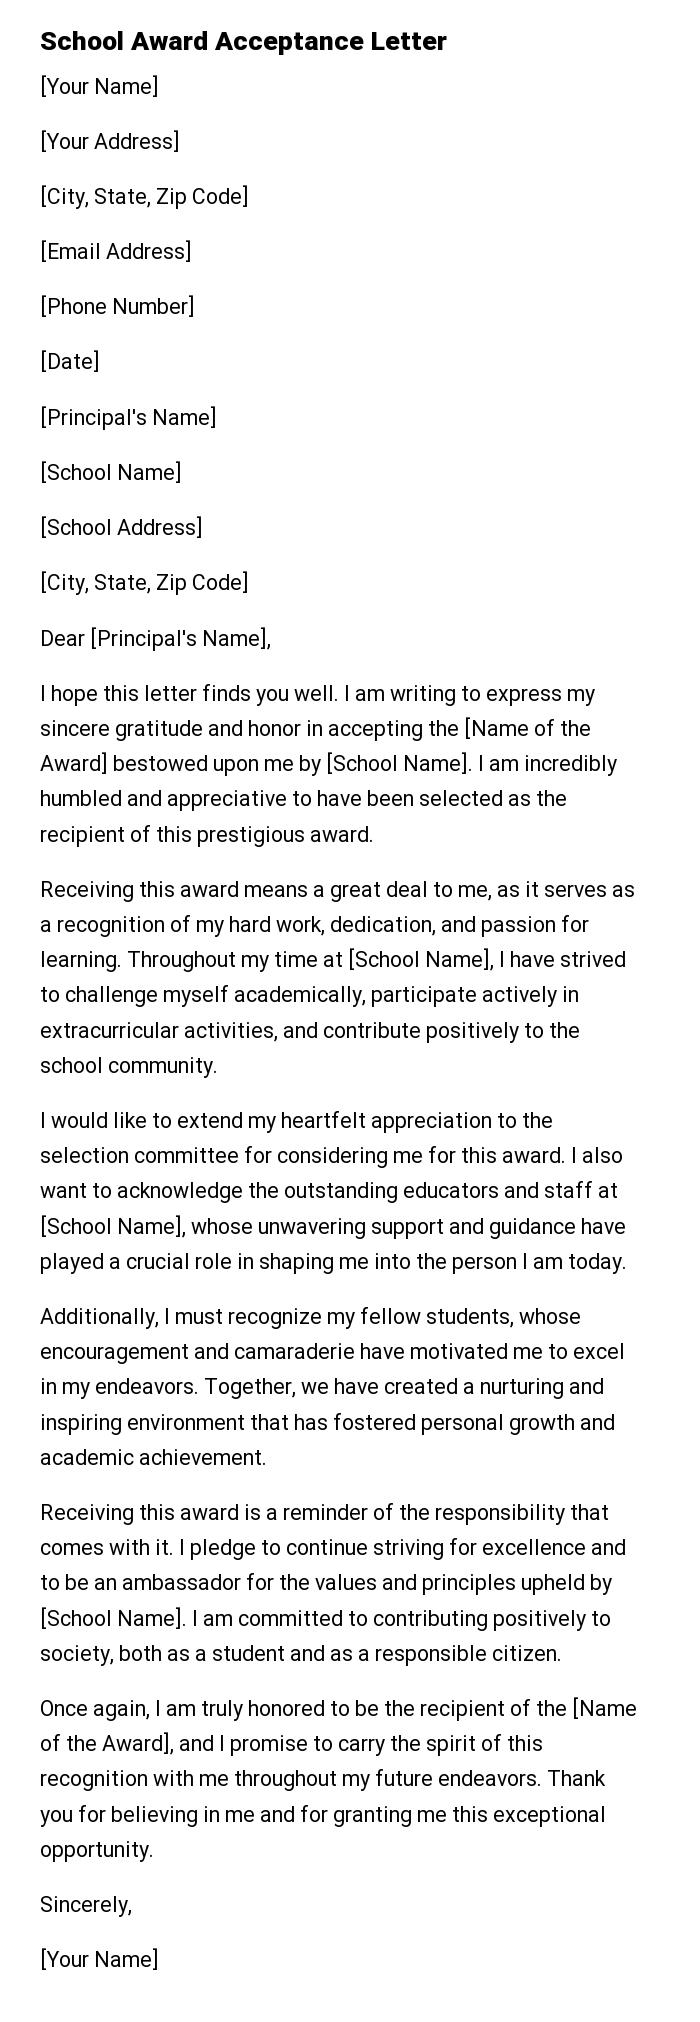 School Award Acceptance Letter